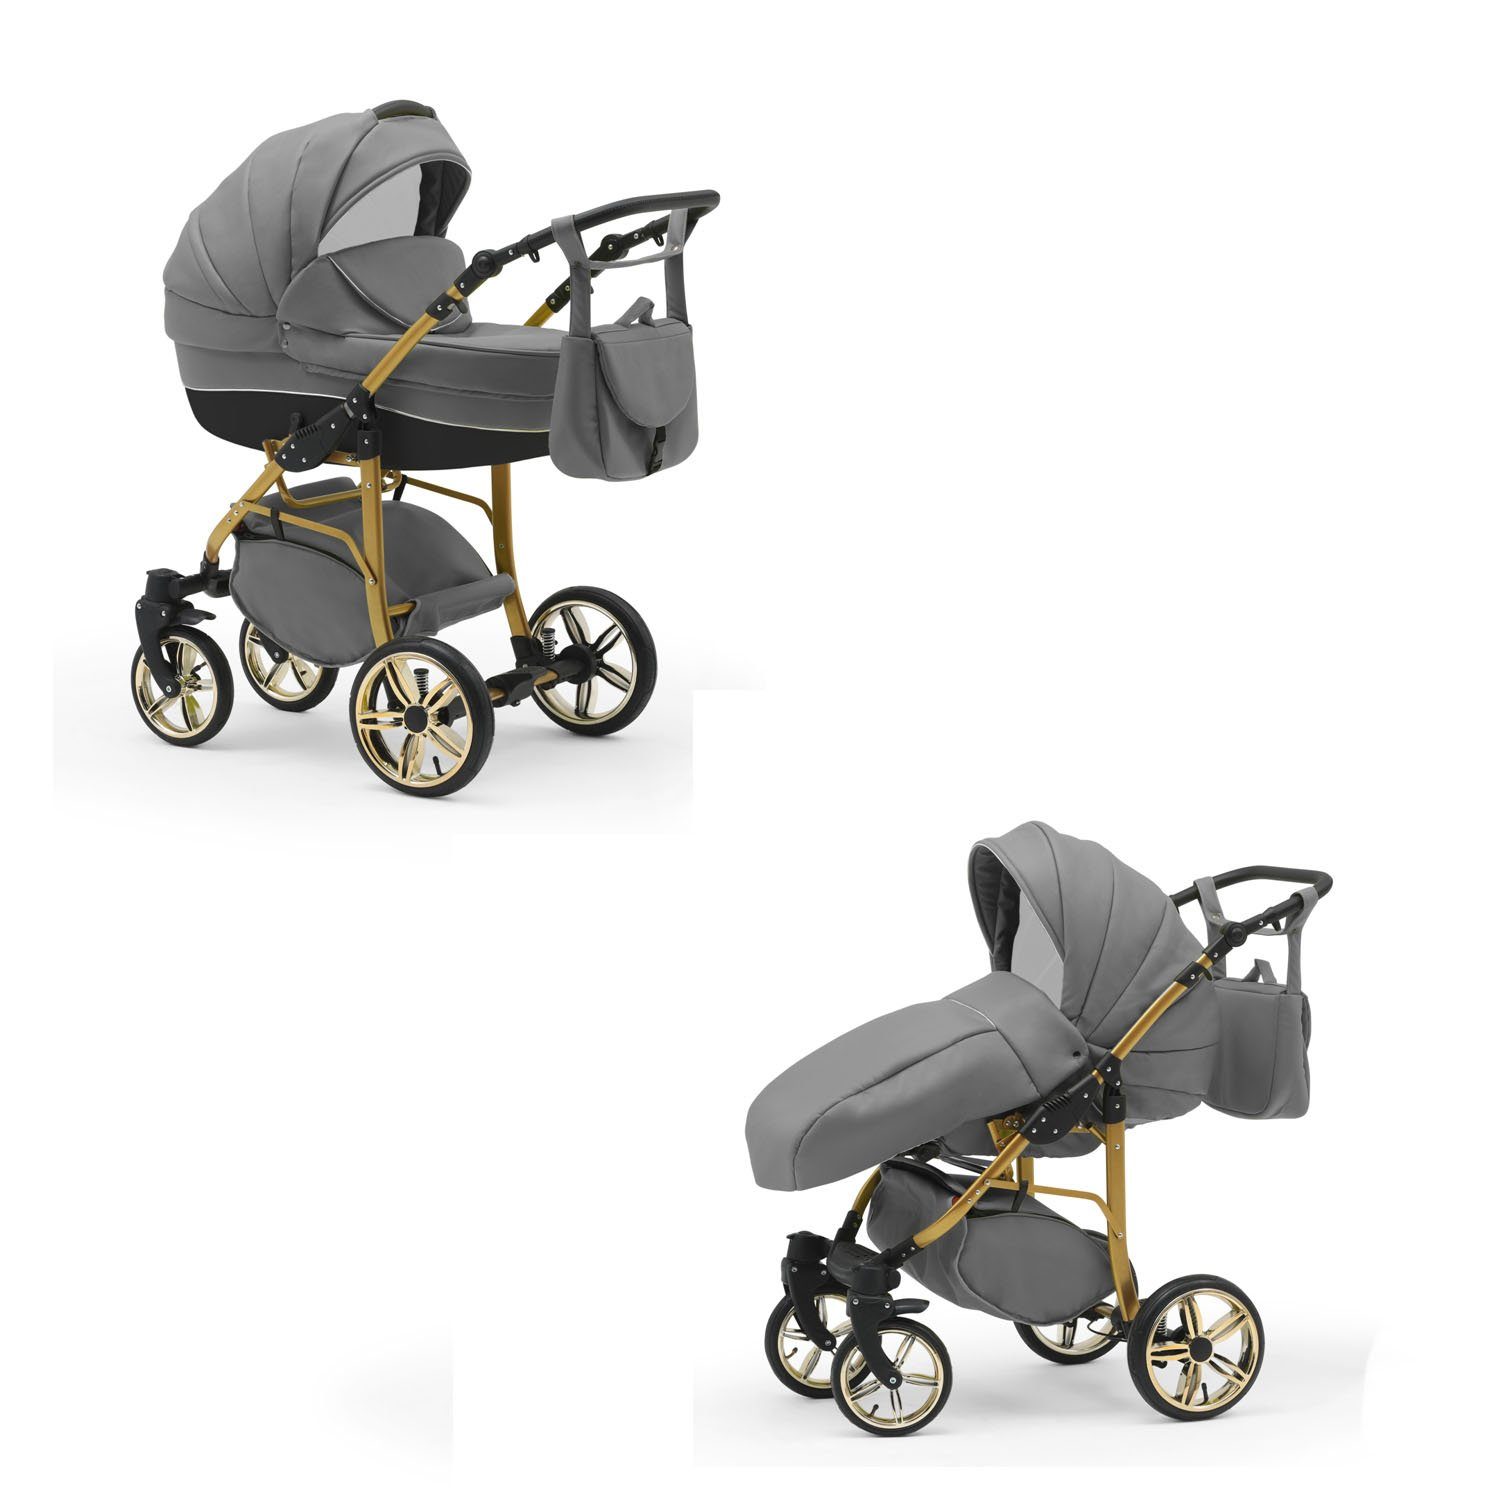 2 babies-on-wheels Hellgrau-Schwarz - Gold Farben Kombi-Kinderwagen in 13 Teile ECO 1 - 46 Cosmo Kinderwagen-Set in